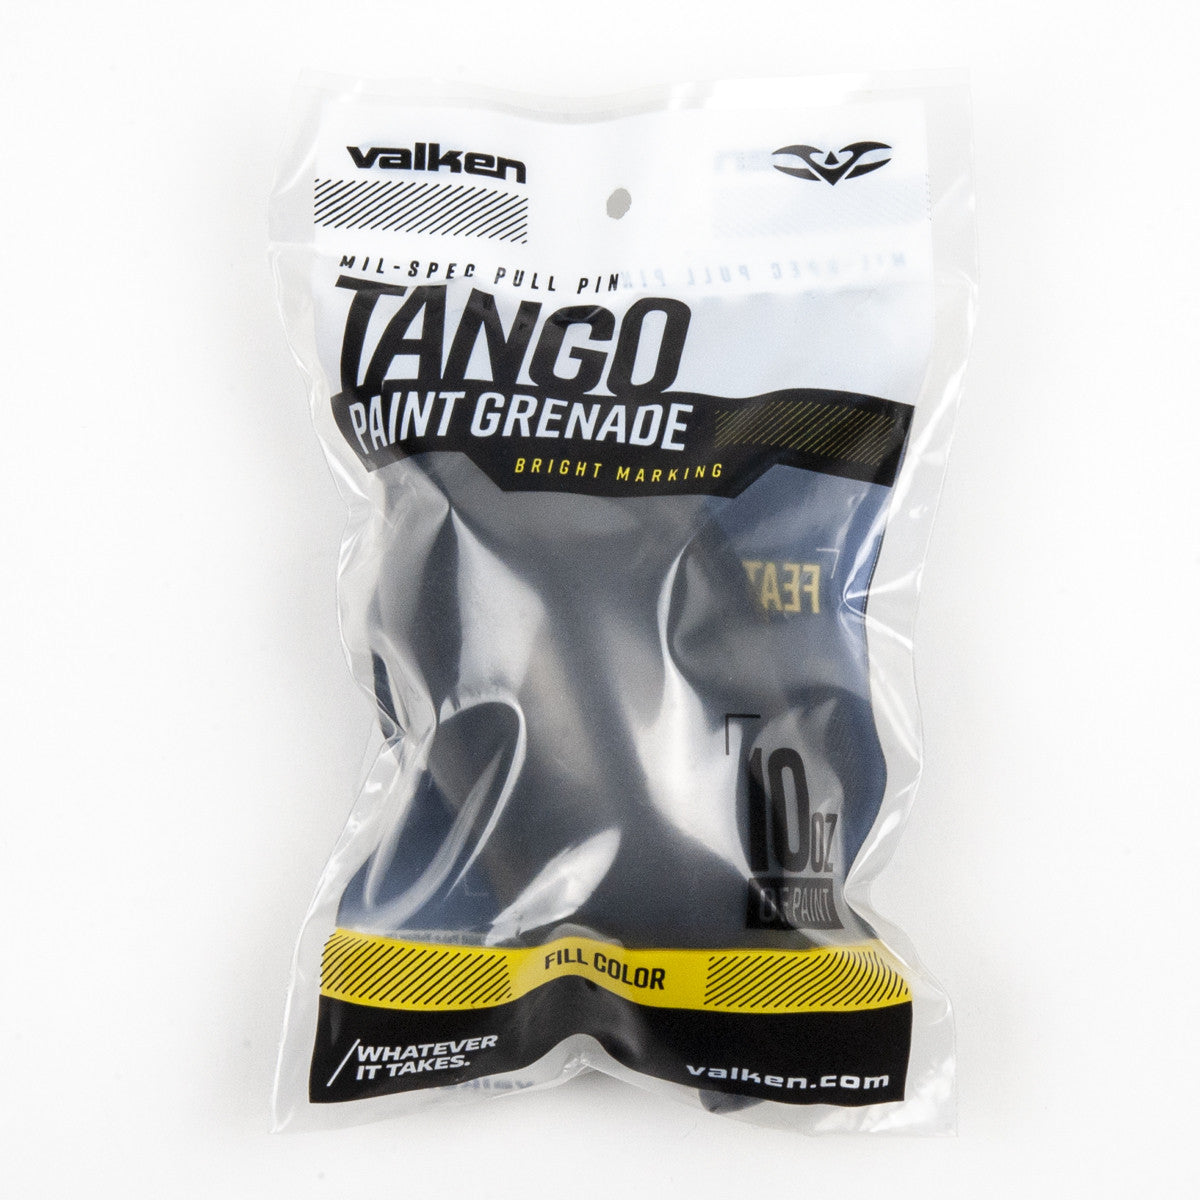 Valken Tango Grenade 10 Oz. - Bright Yellow Paint